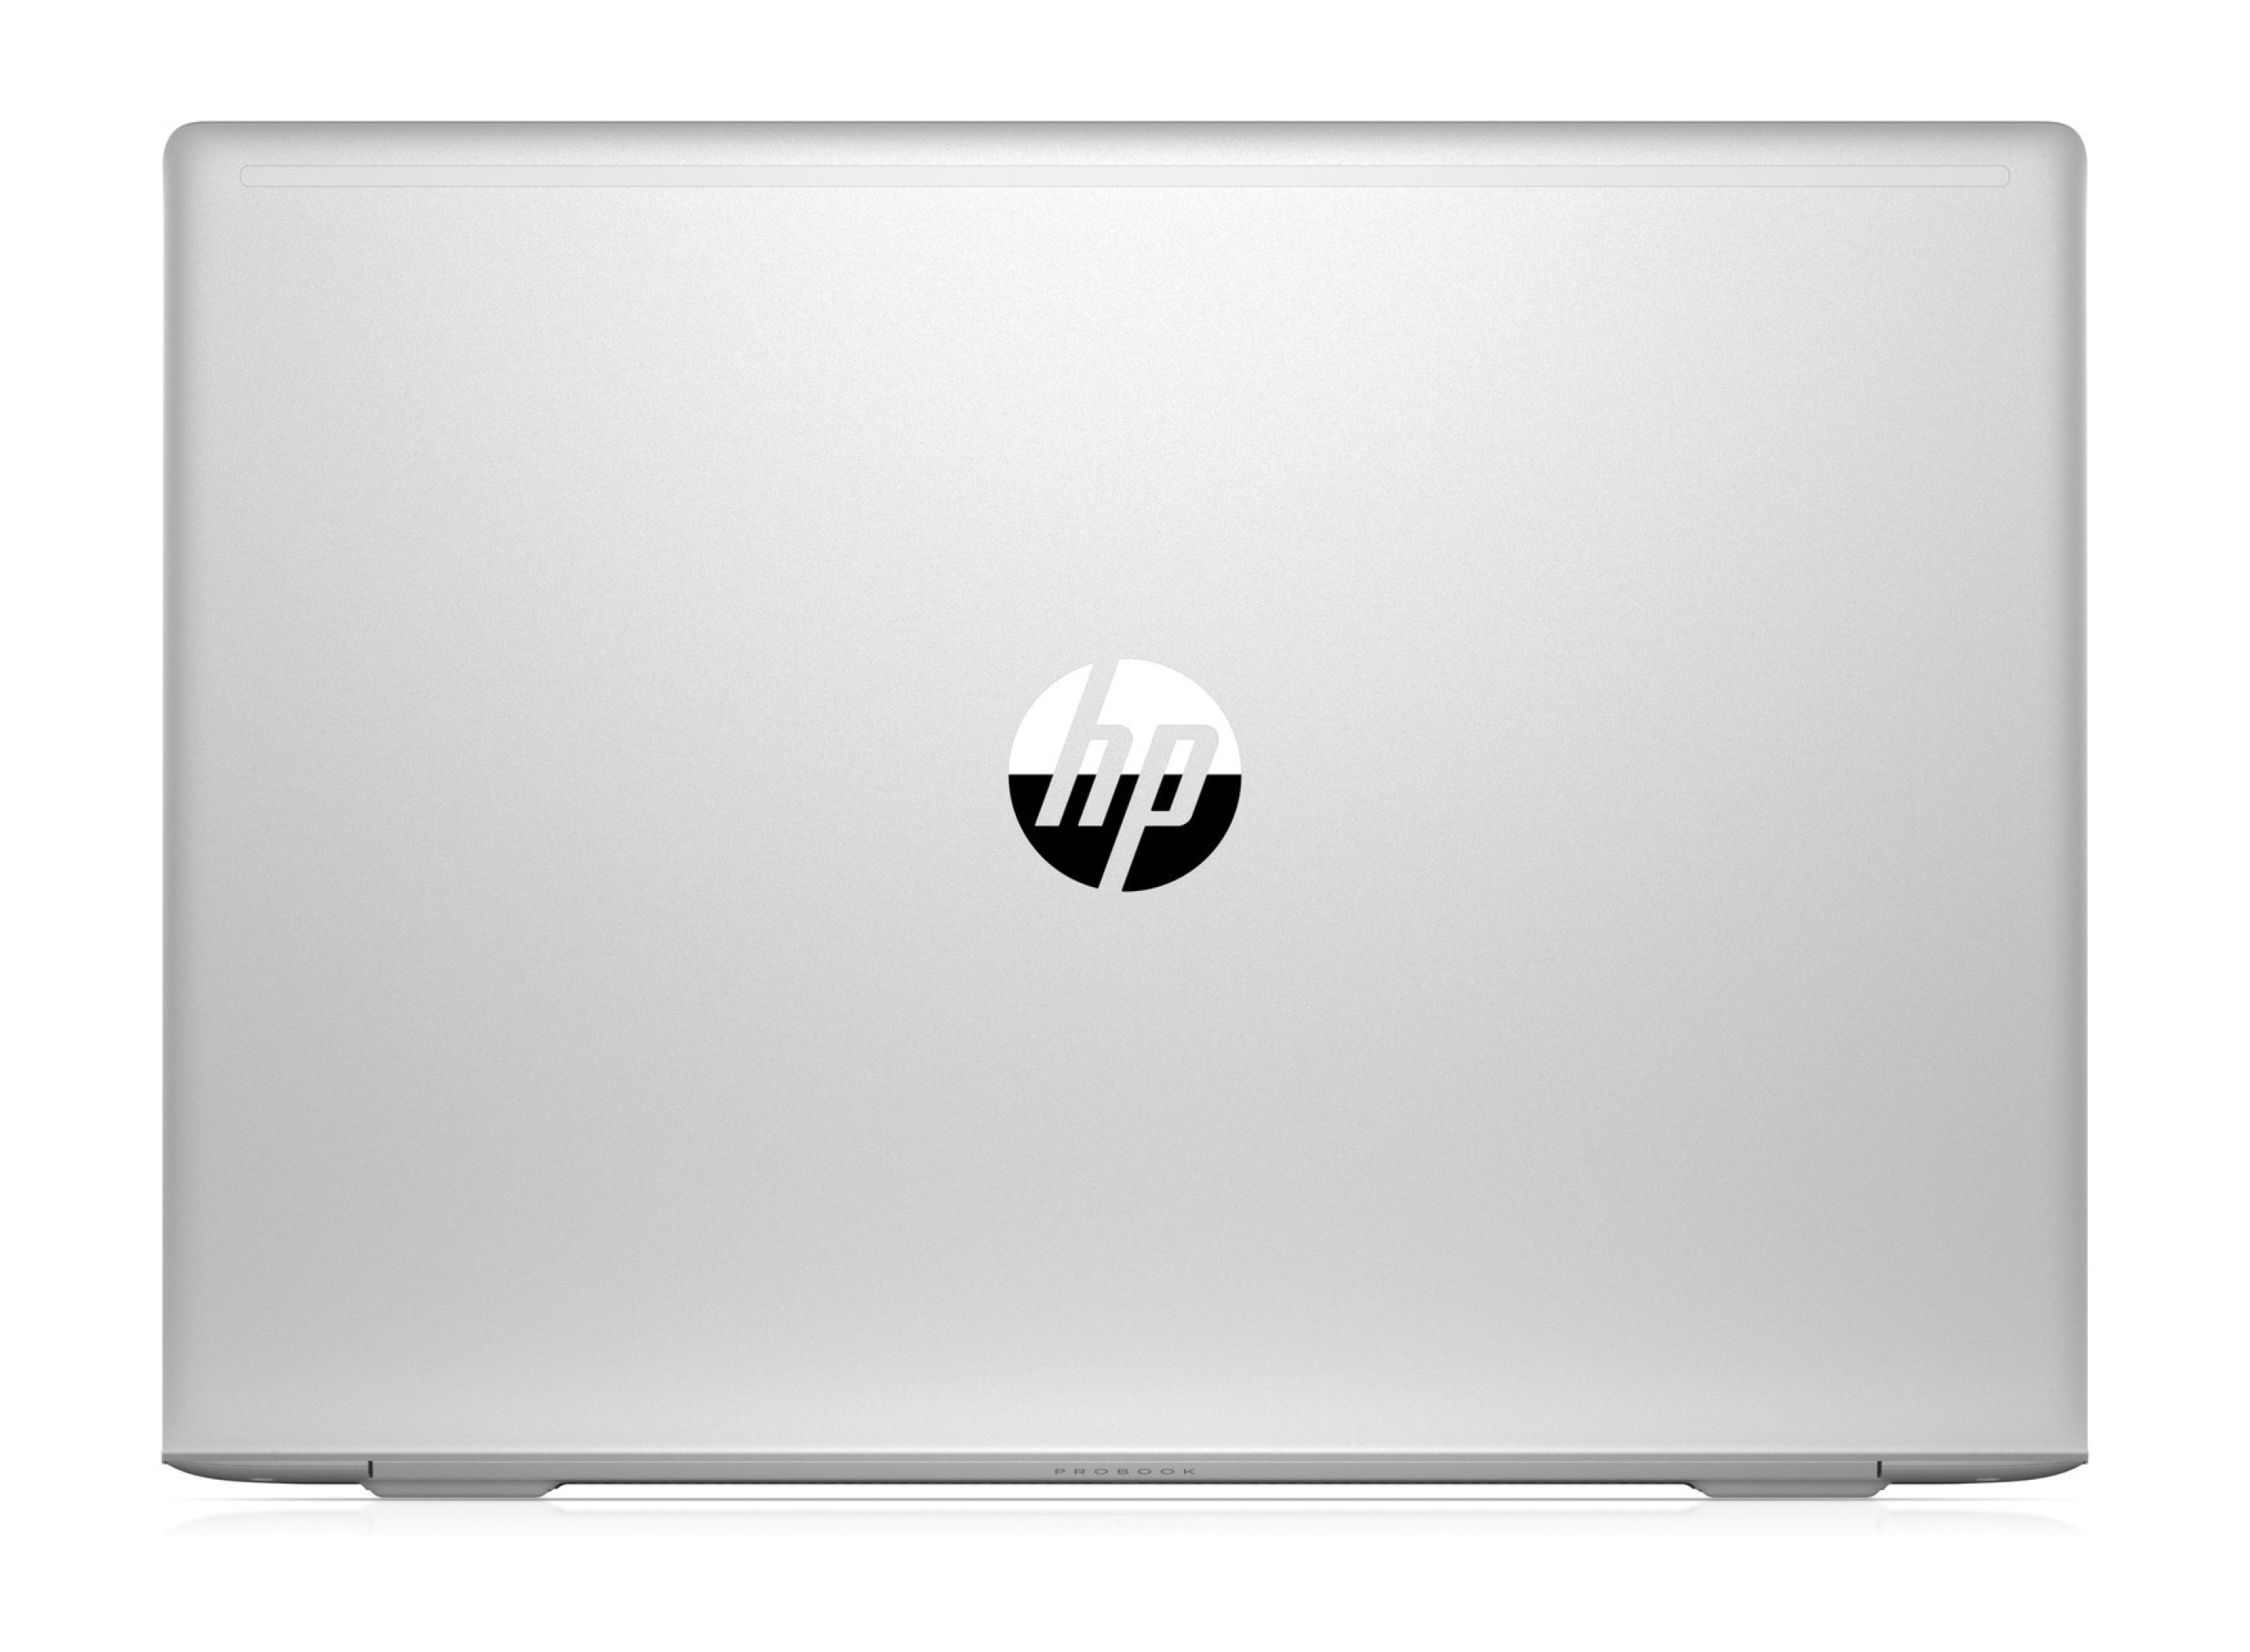  HP ProBook 455 G6 خرید و قیمت لپ تاپ اچ پی پرو بوک 455 | لاکچری لپ تاپ 